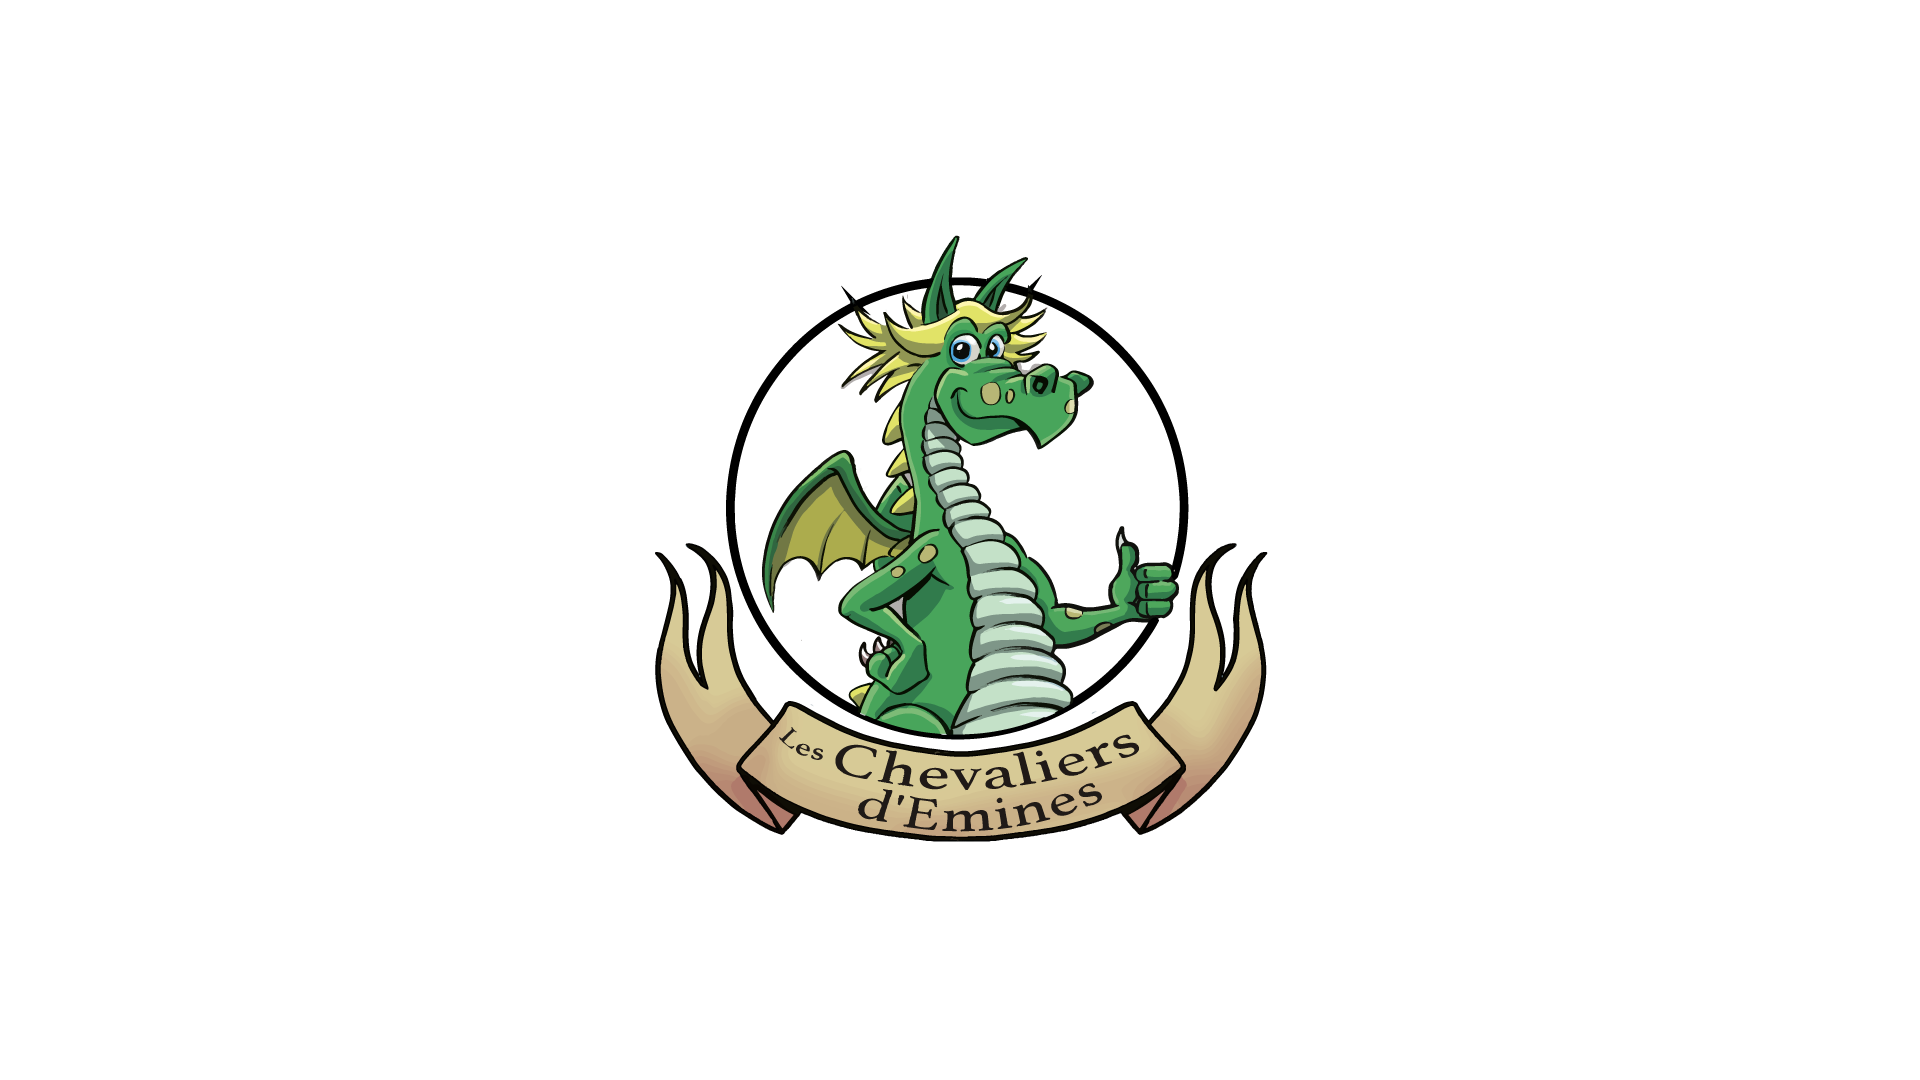 dragon-d’emines_logo_2020_2